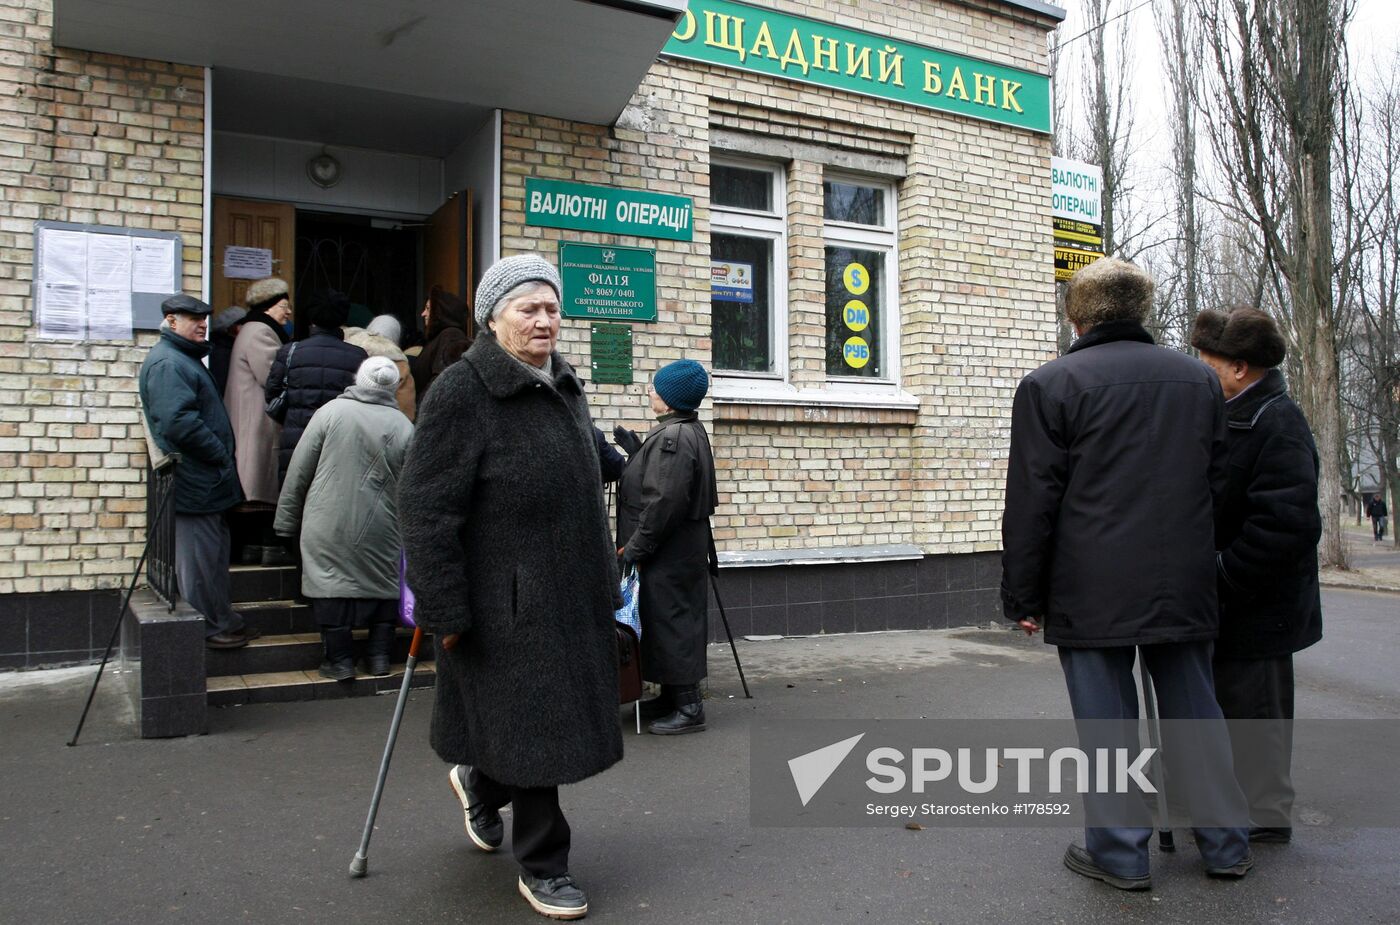 Ukrainian authorities pay off compensation